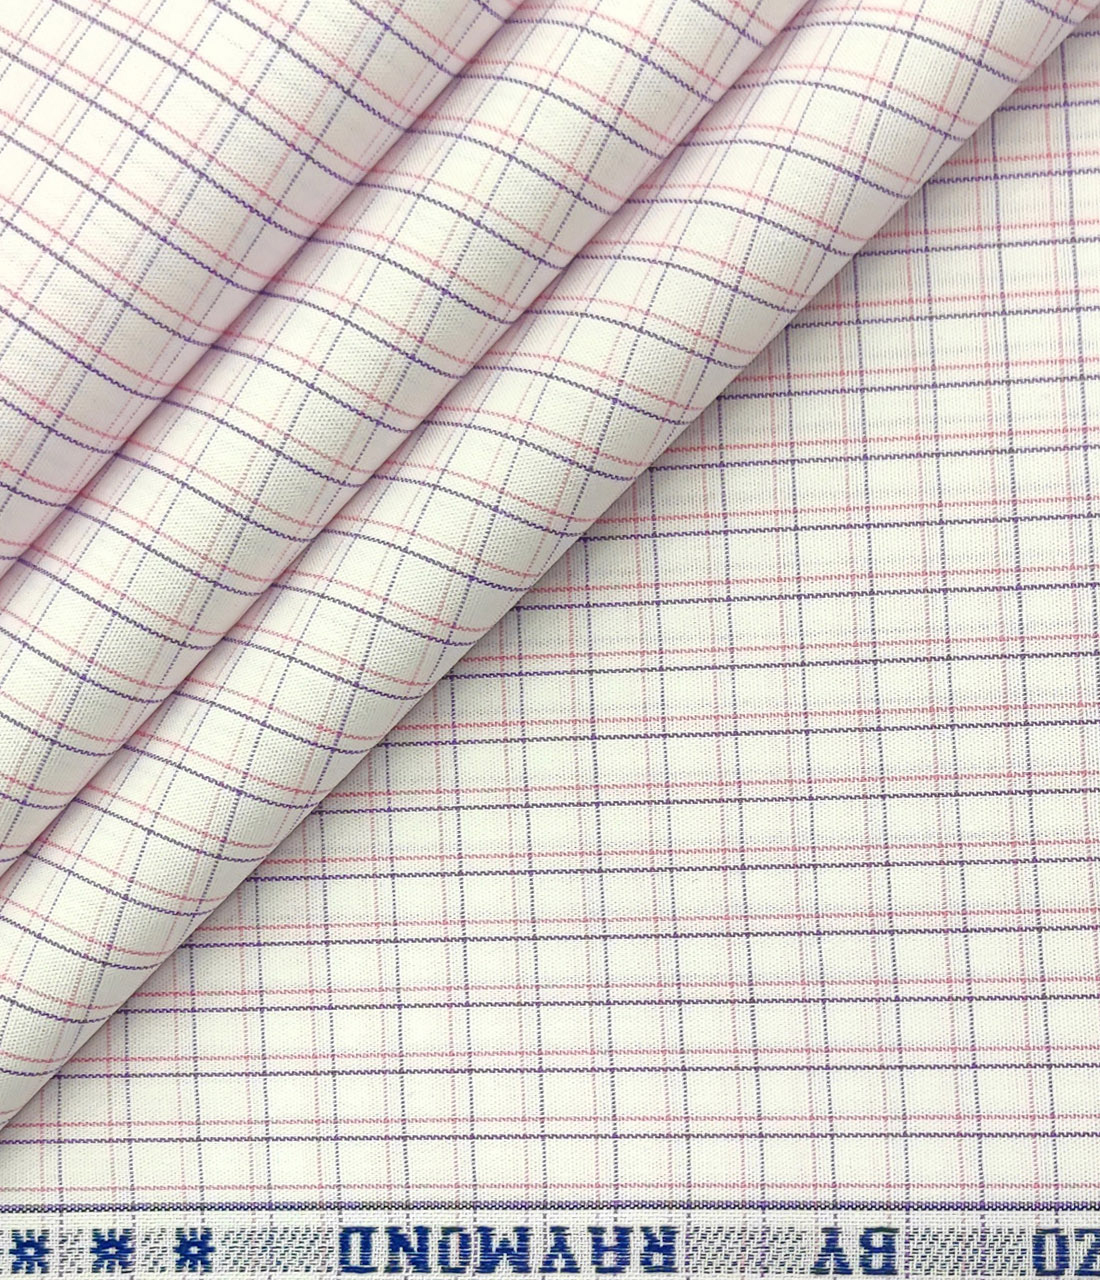 Raymond Men's Cotton Checks 2 Meter Unstitched Shirting Fabric (White)